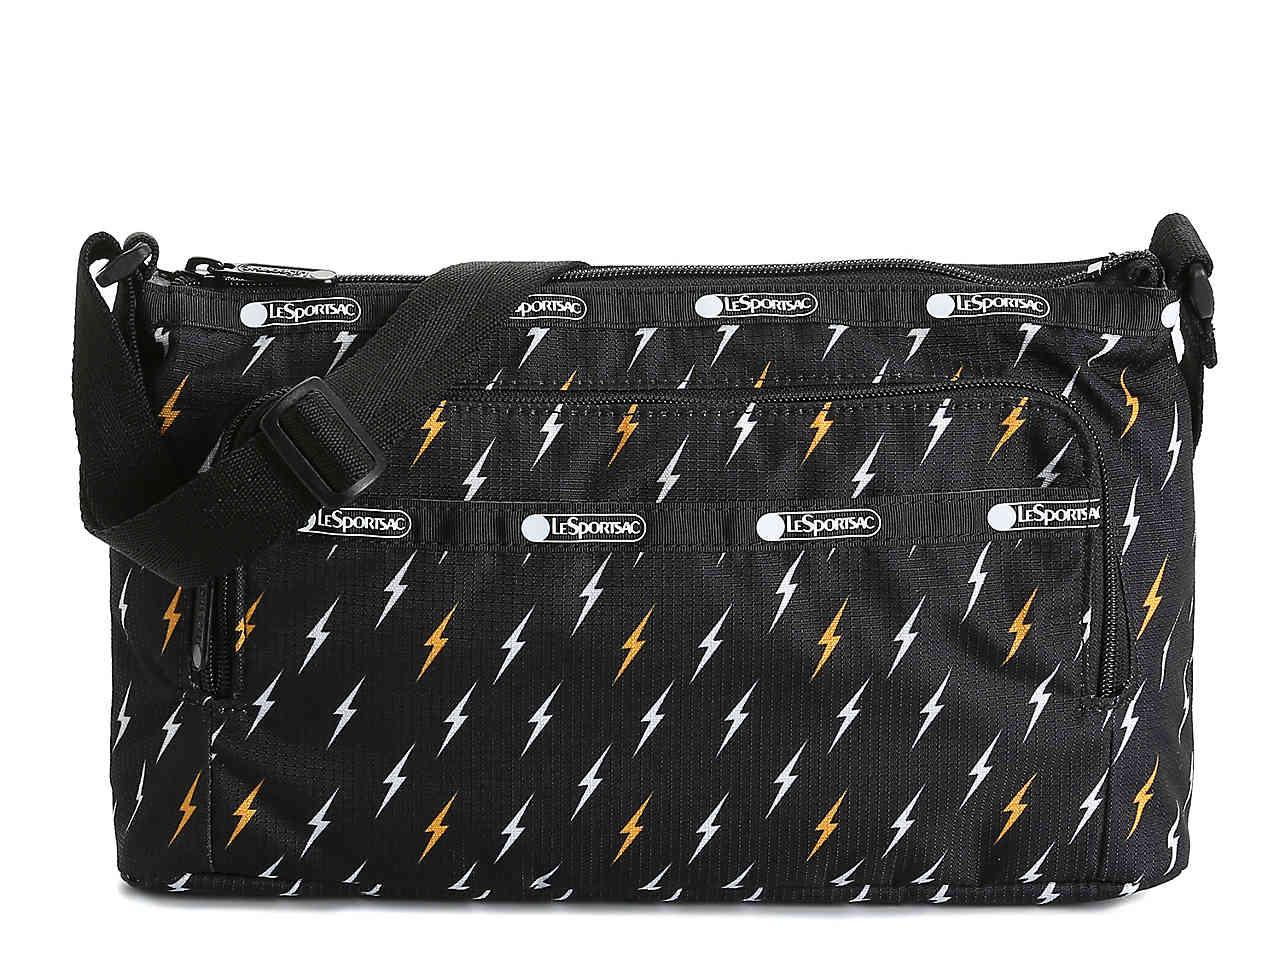 LeSportsac Janis Crossbody Bag in Black - Lyst